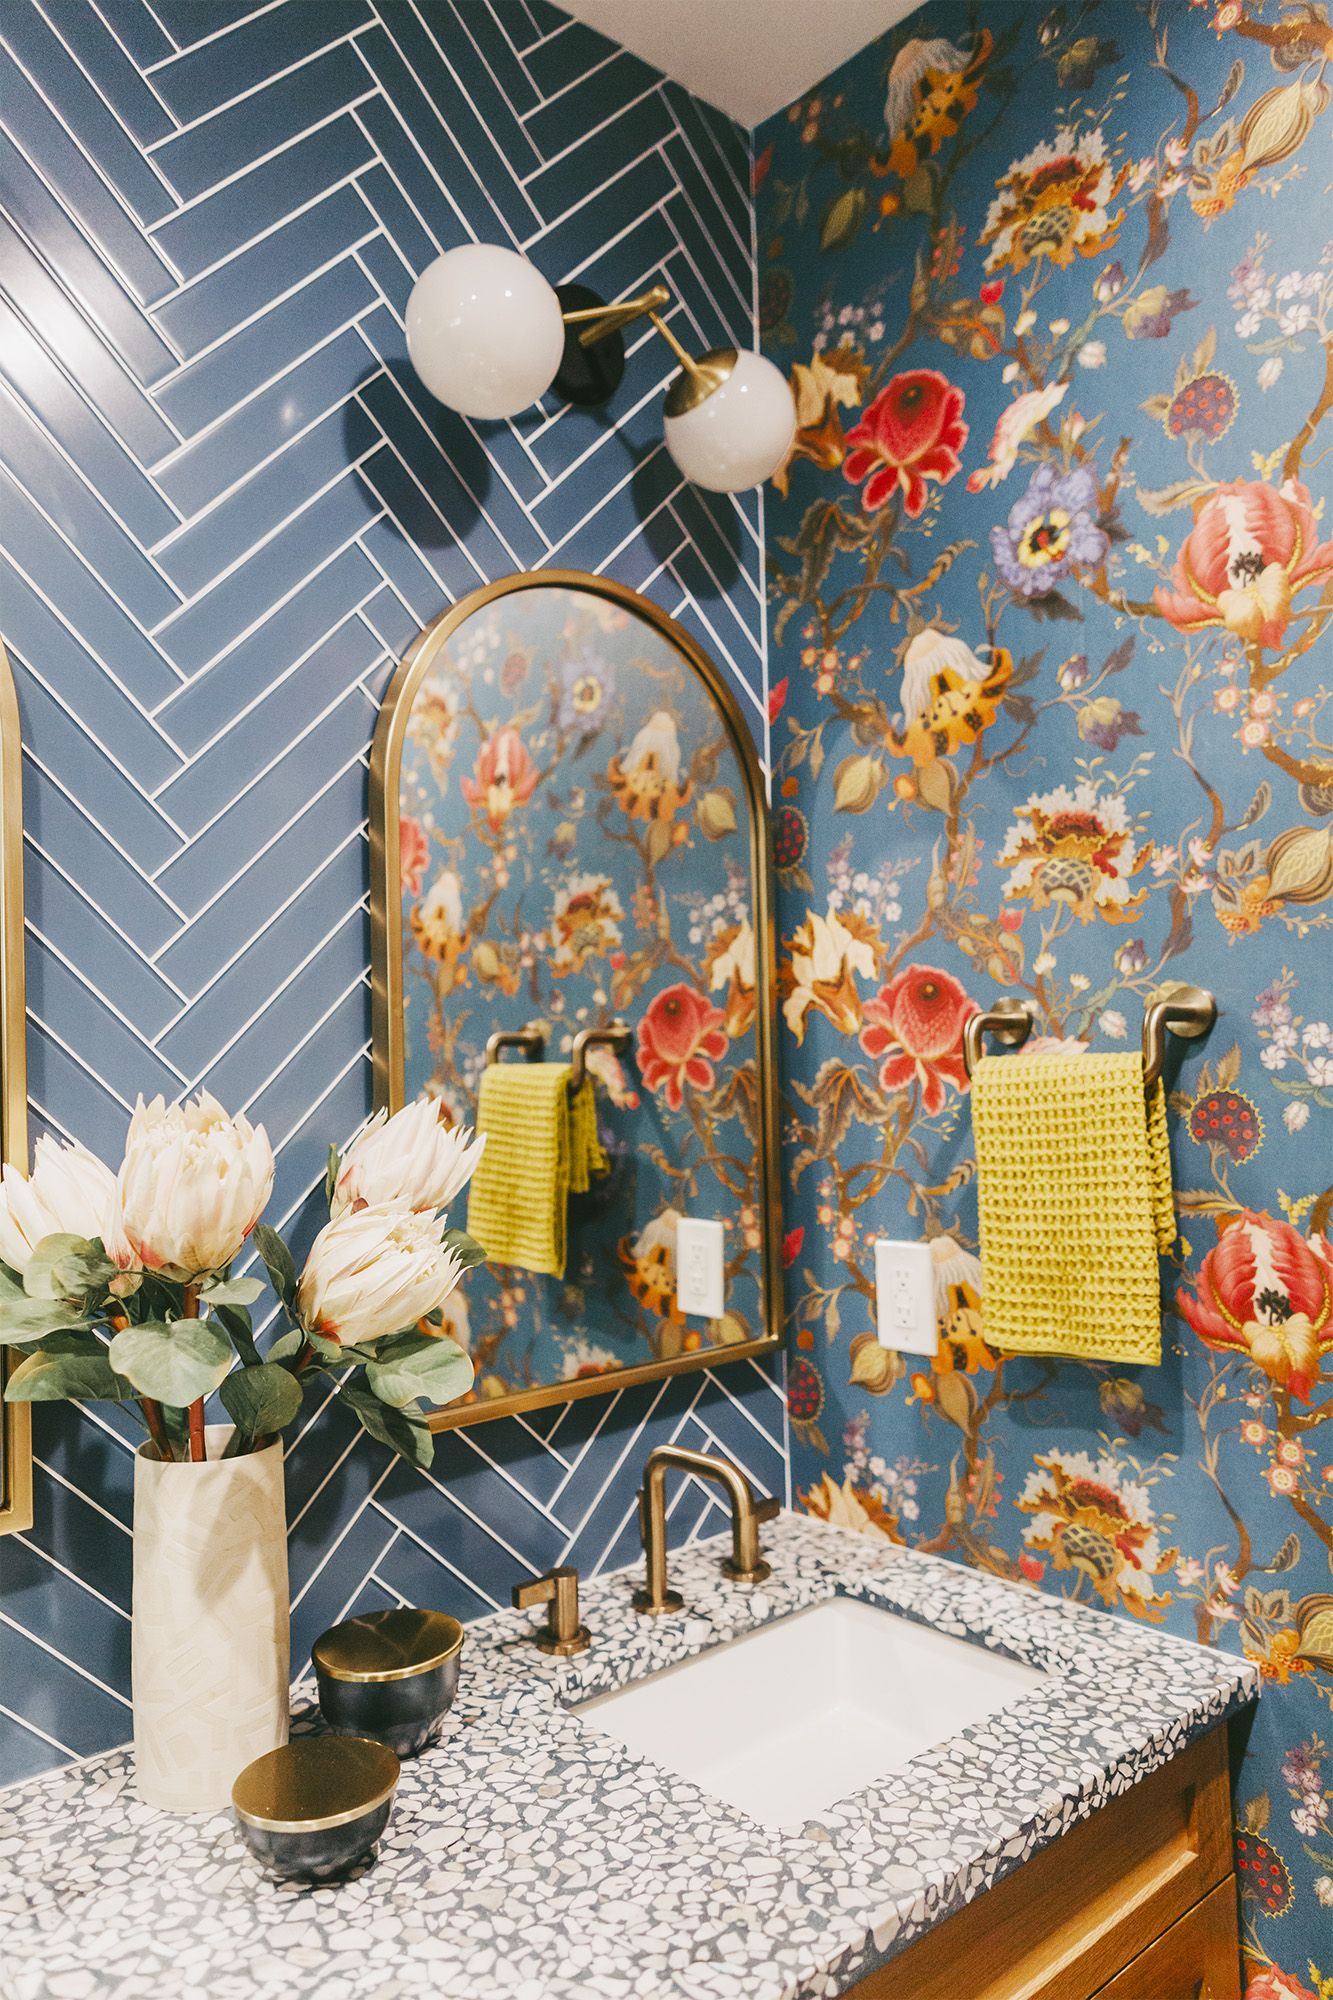 20 Best Bathroom Mirror Ideas - Bathroom Mirror Designs for Sinks and Vanity